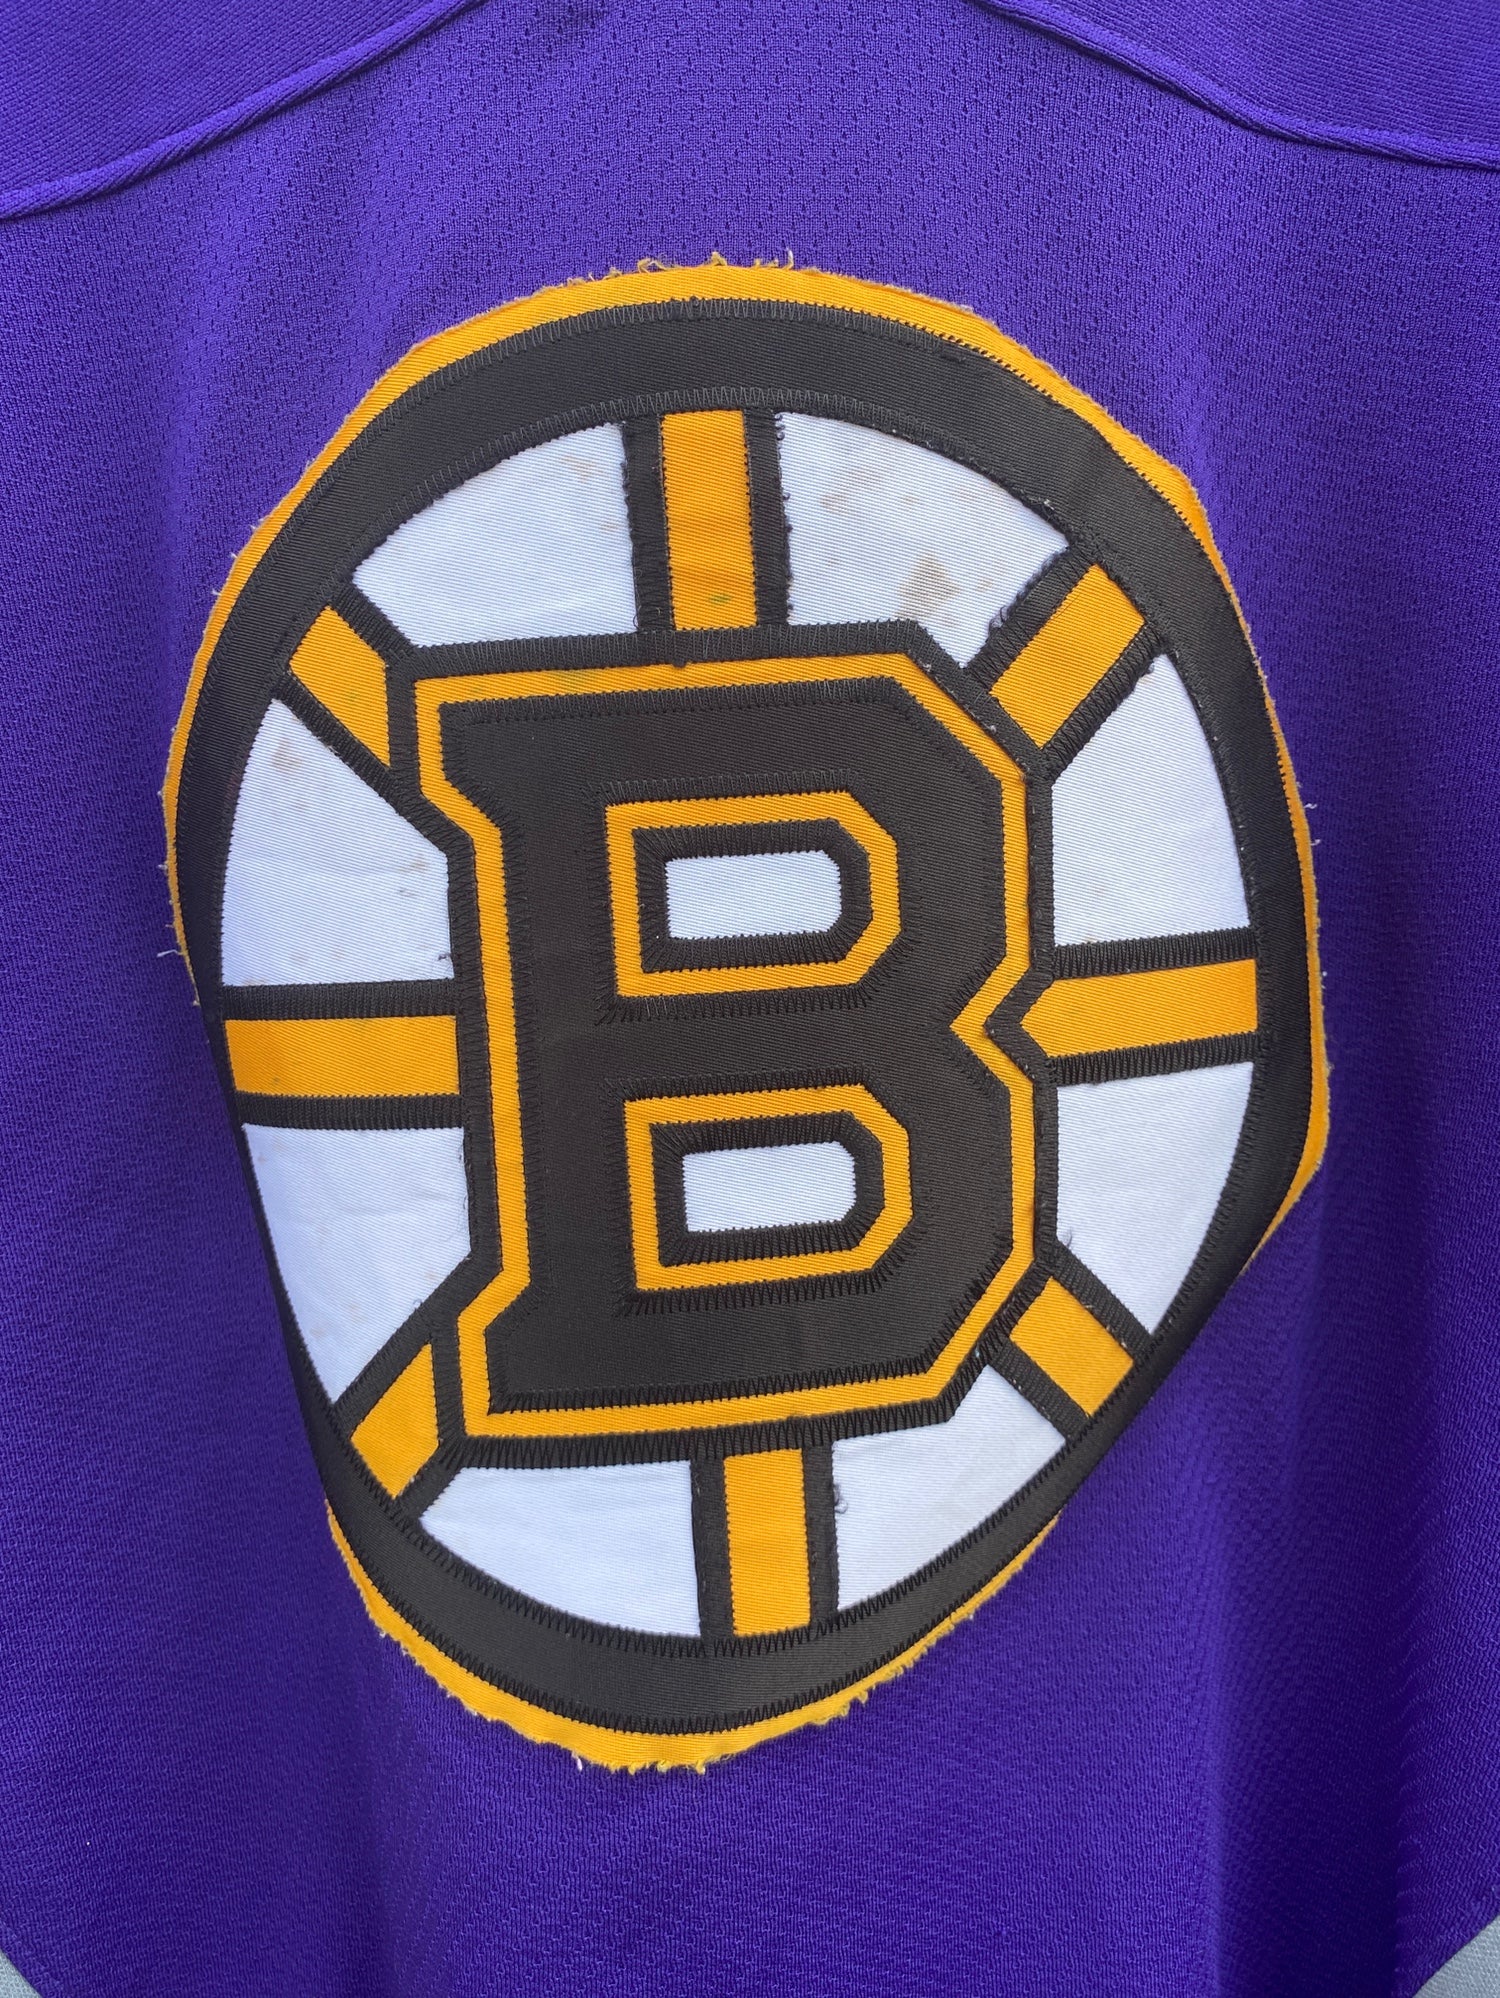 Boston Bruins adidas Hockey Fights Cancer Practice Jersey - Purple